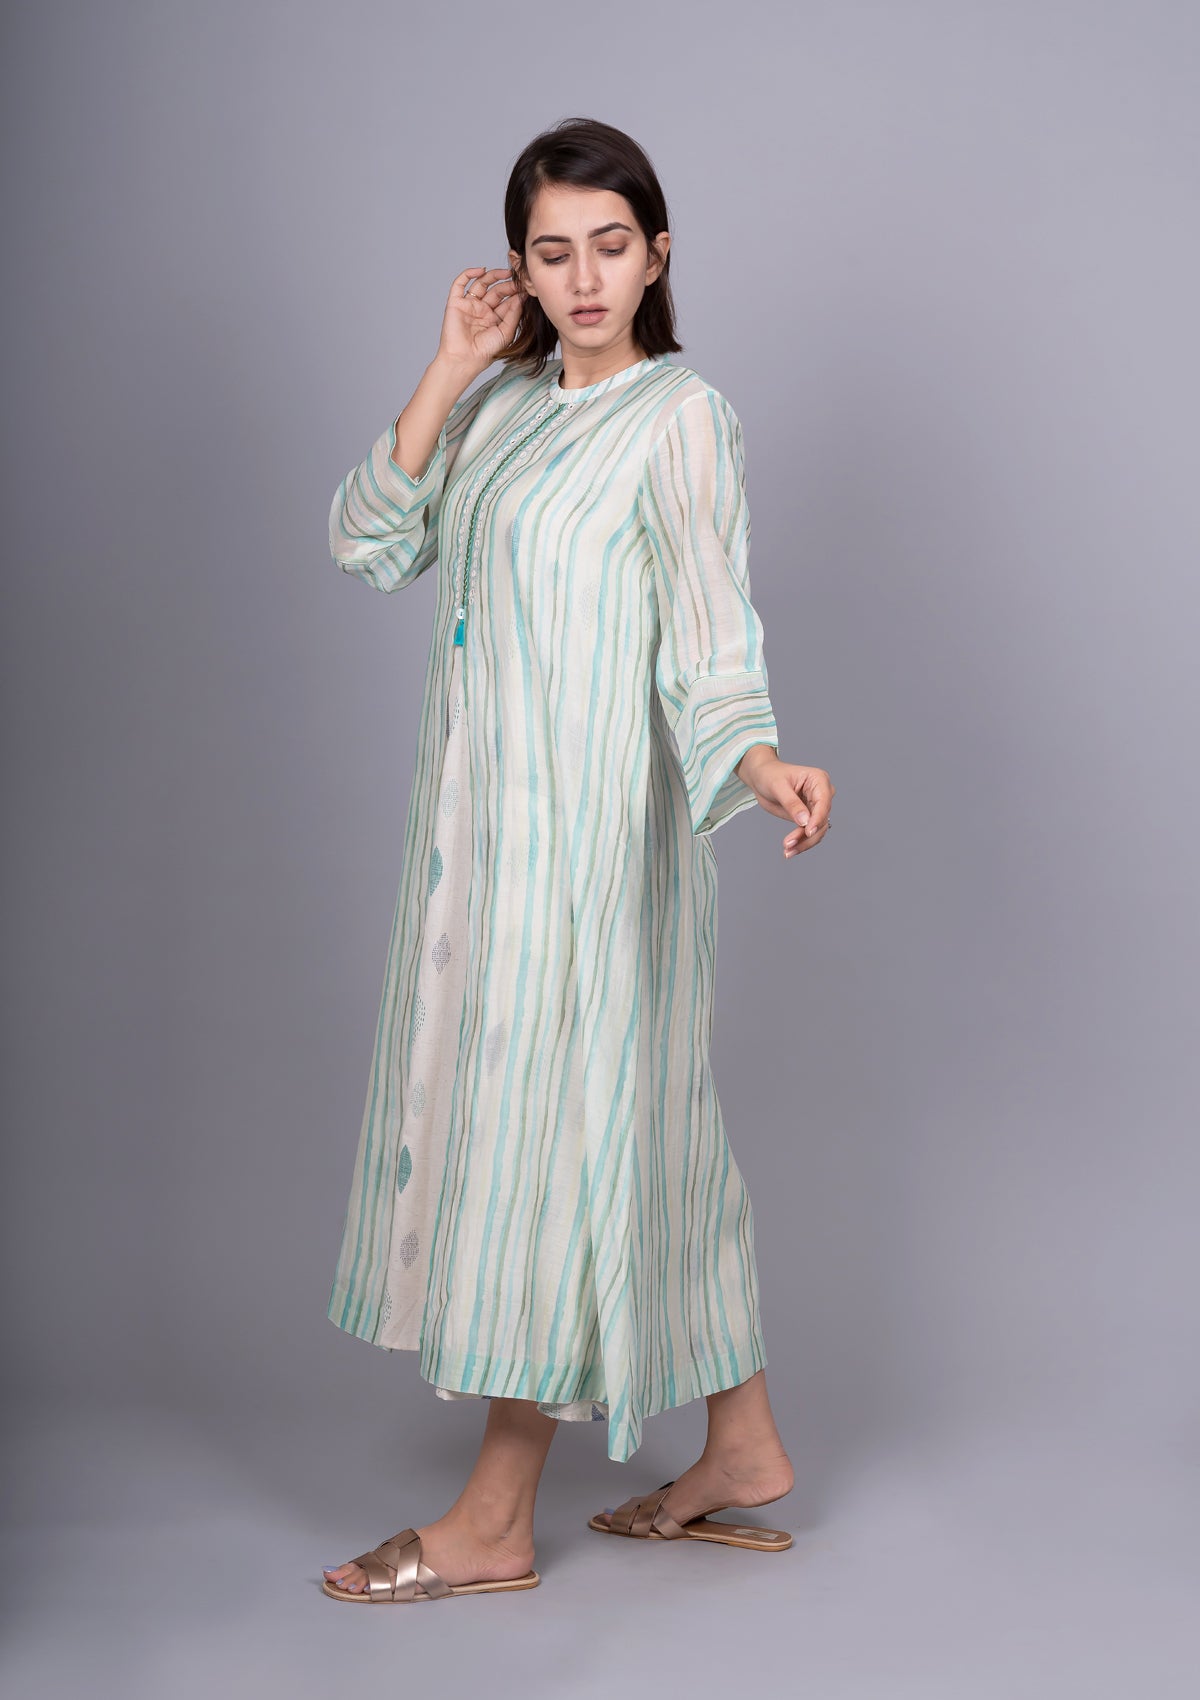 Mint Green Chanderi Stripes Dress With Cotton Block Printed Sleeveless Dress